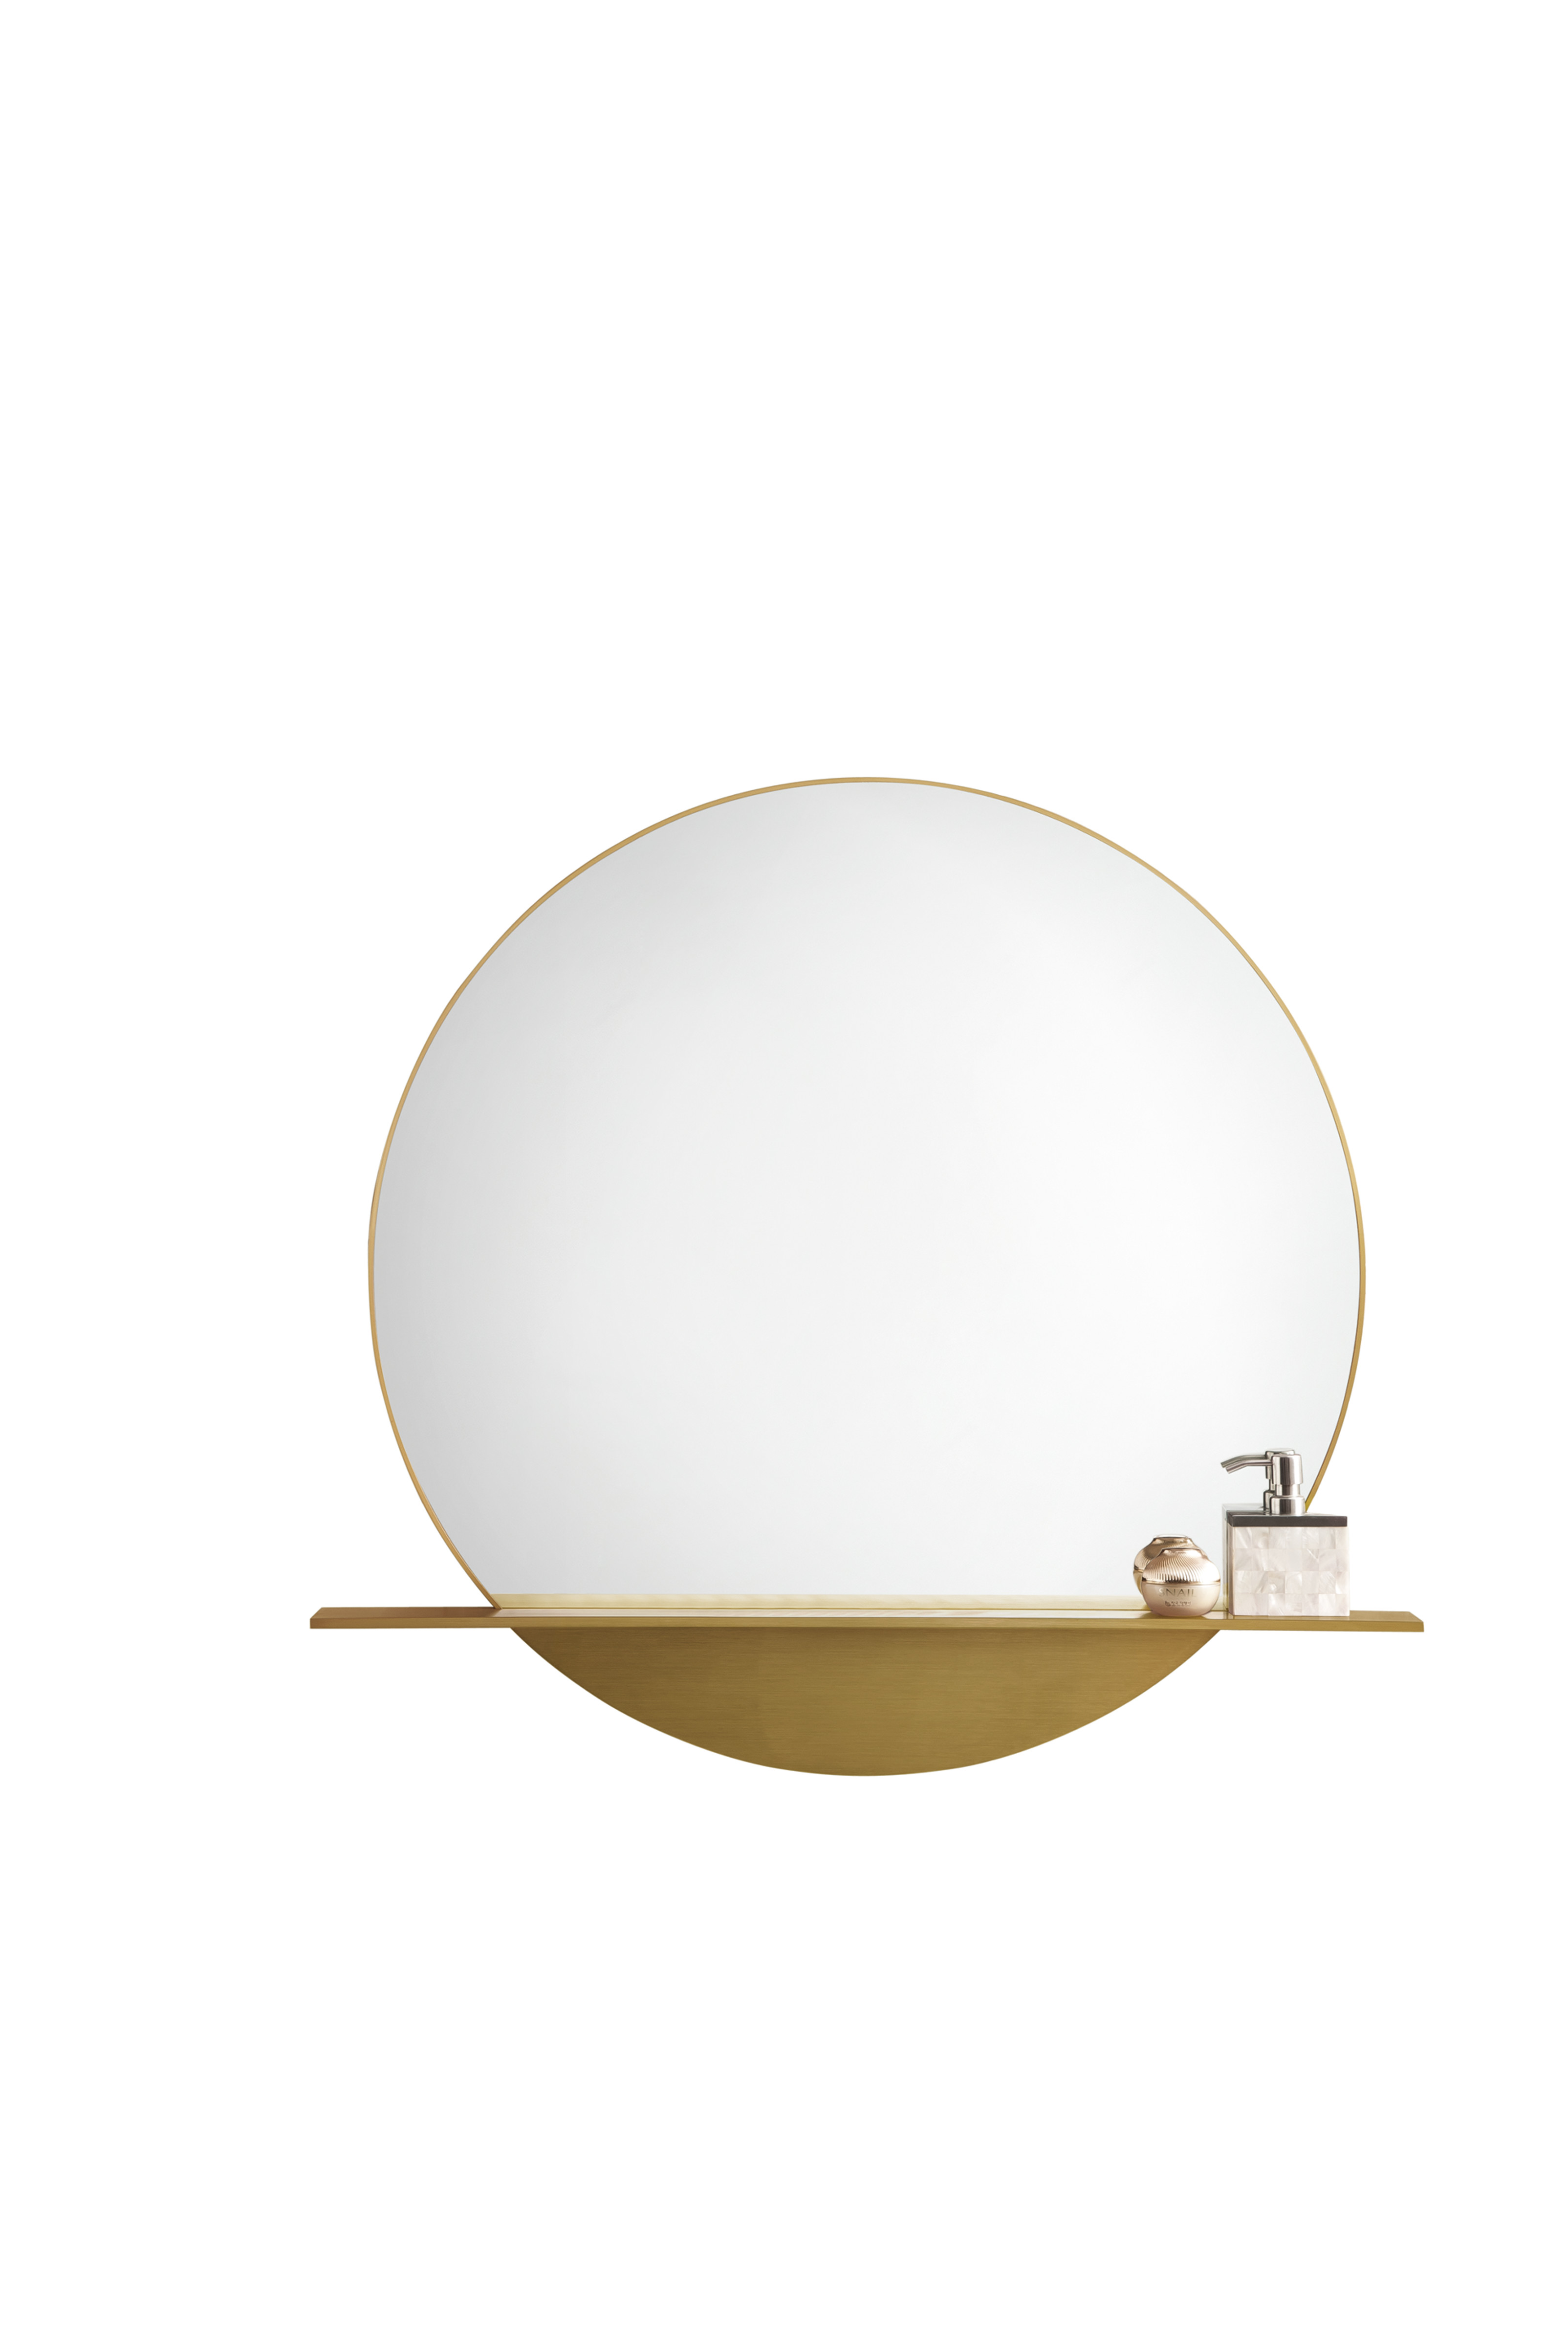 James Martin 909-M36-RG Platform 36" Mirror, Radiant Gold